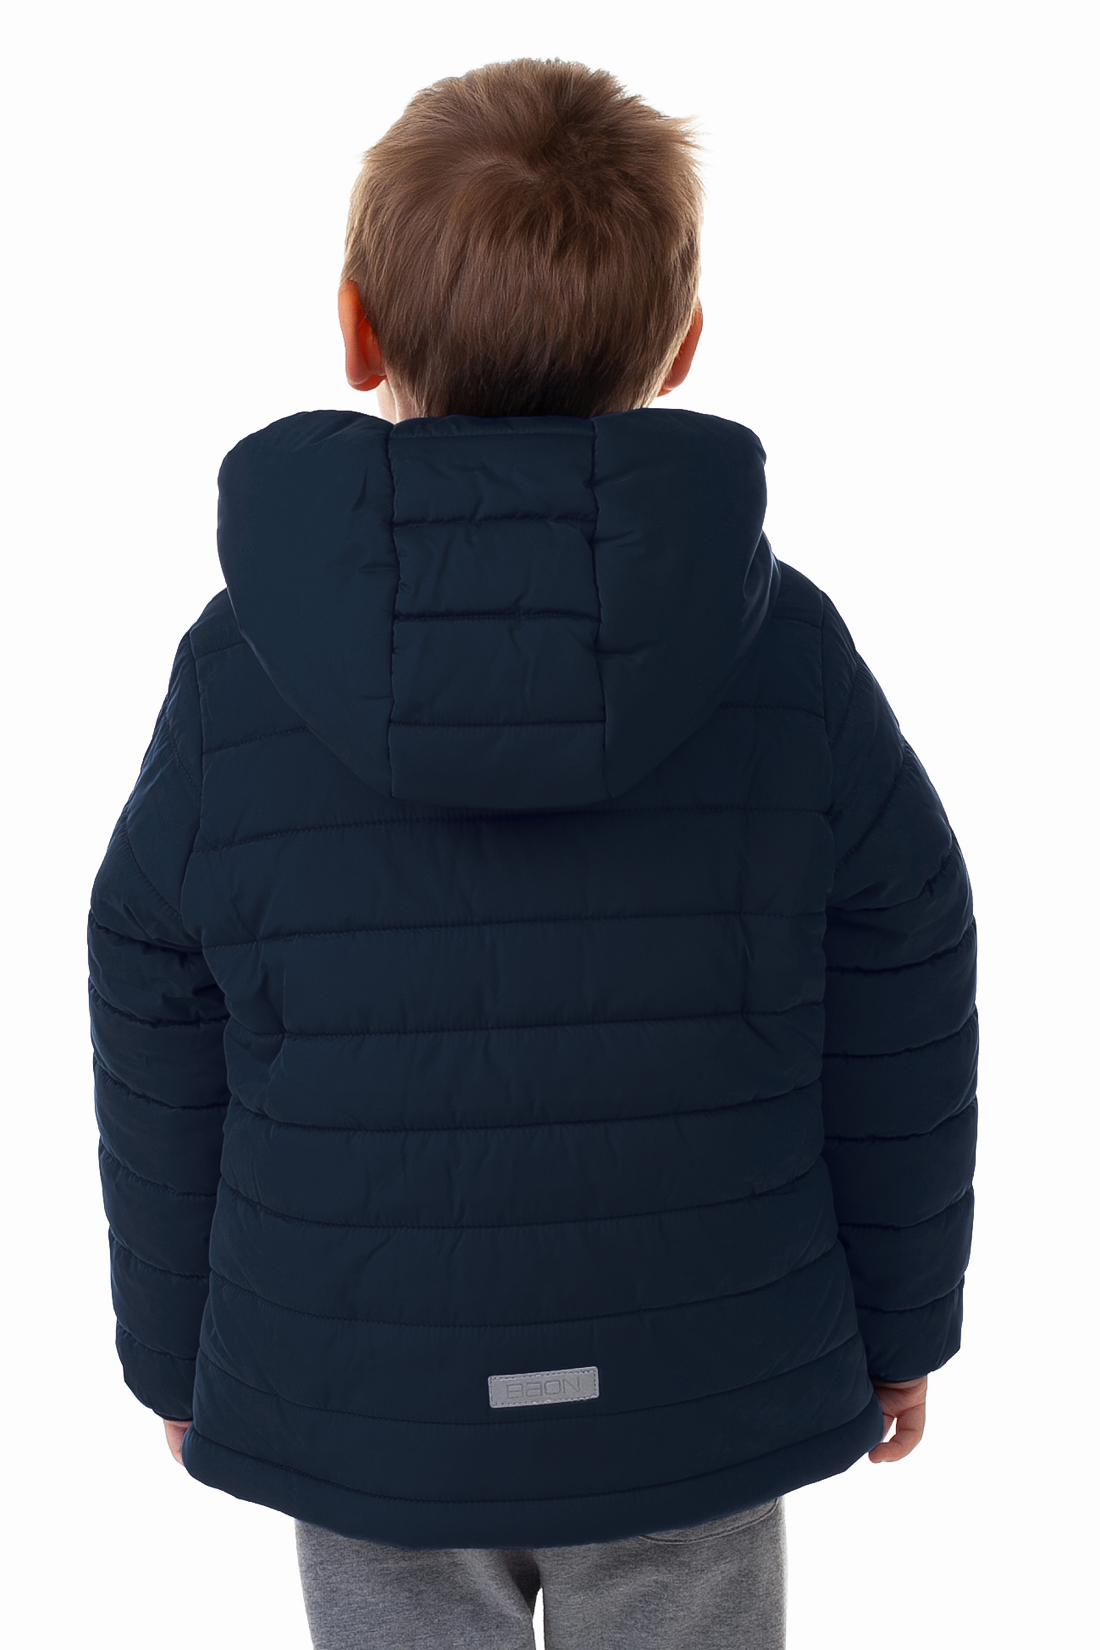 Куртка для мальчика (арт. baon BK538505), размер 110-116, цвет синий Куртка для мальчика (арт. baon BK538505) - фото 2